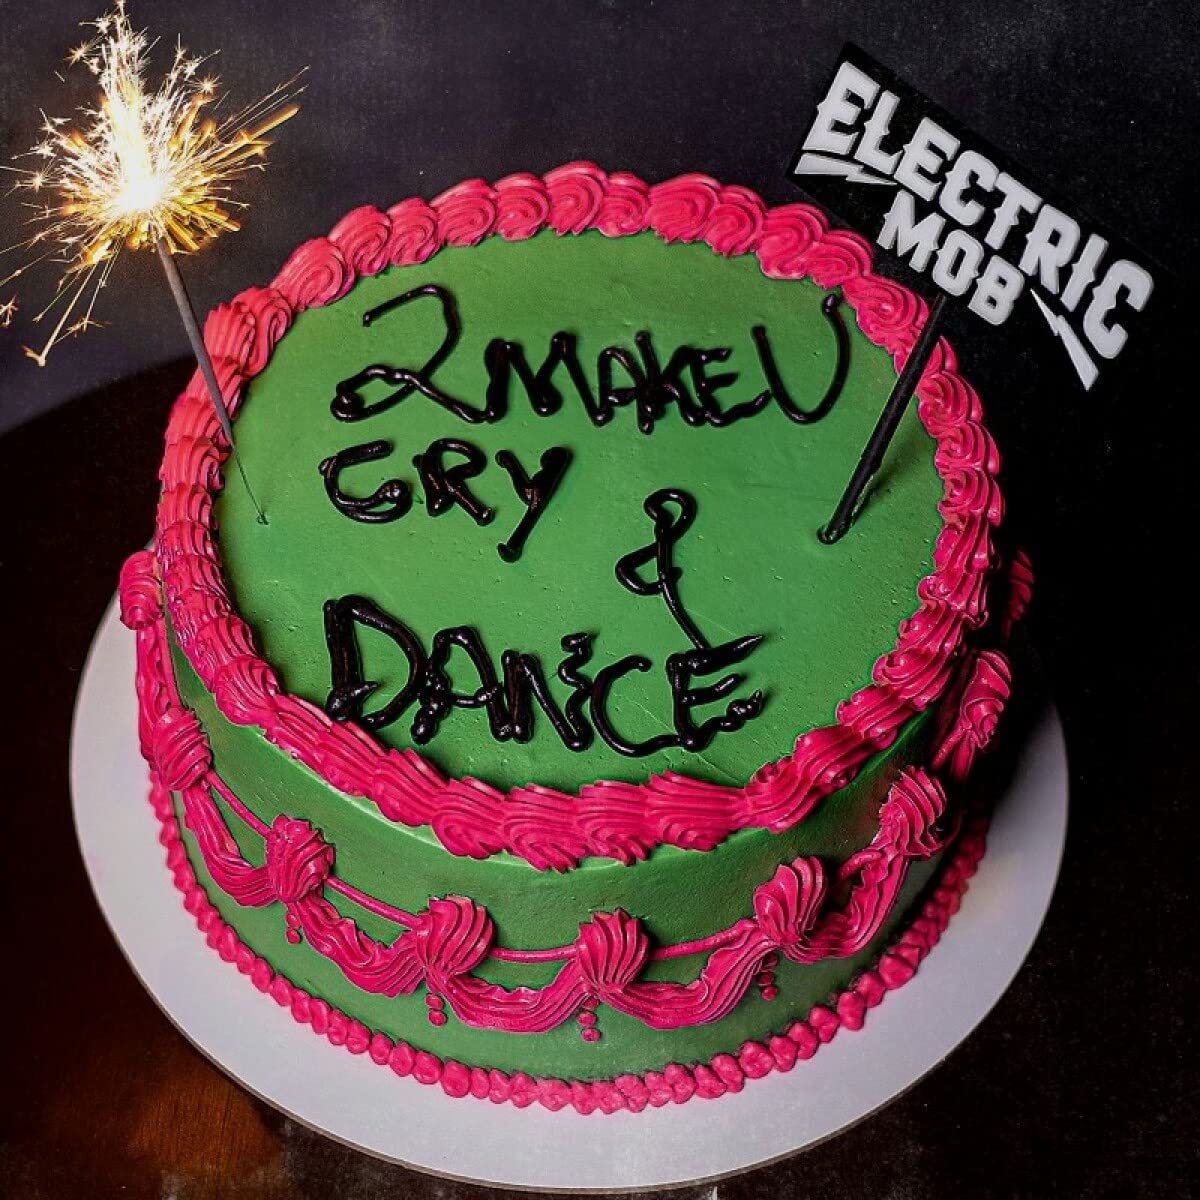 Electric Mob 2 Make U Cry & Dance CD [Importado]